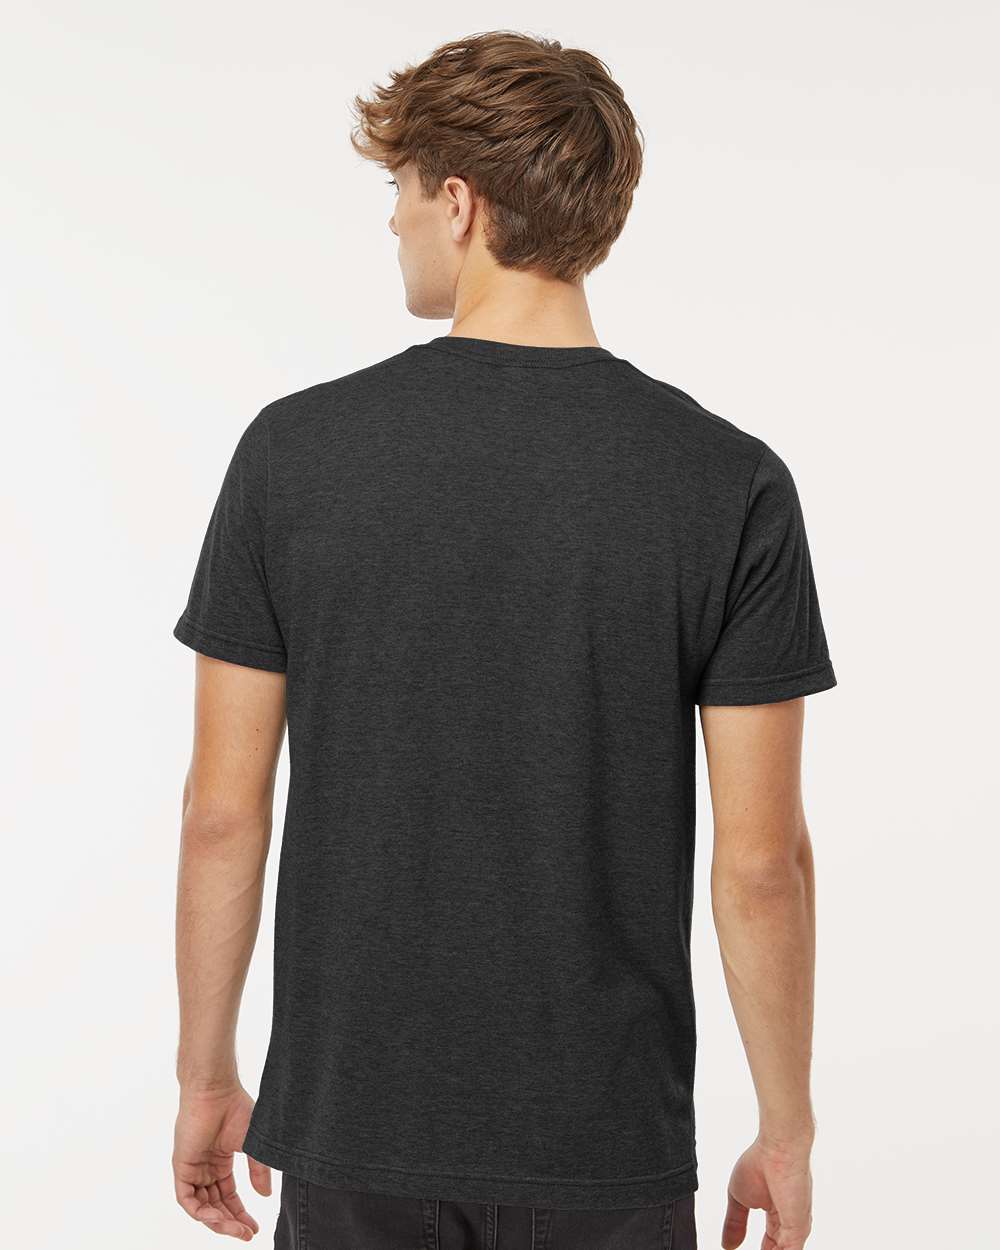 M&O Deluxe Blend V-Neck T-Shirt 3543 #colormdl_Heather Graphite